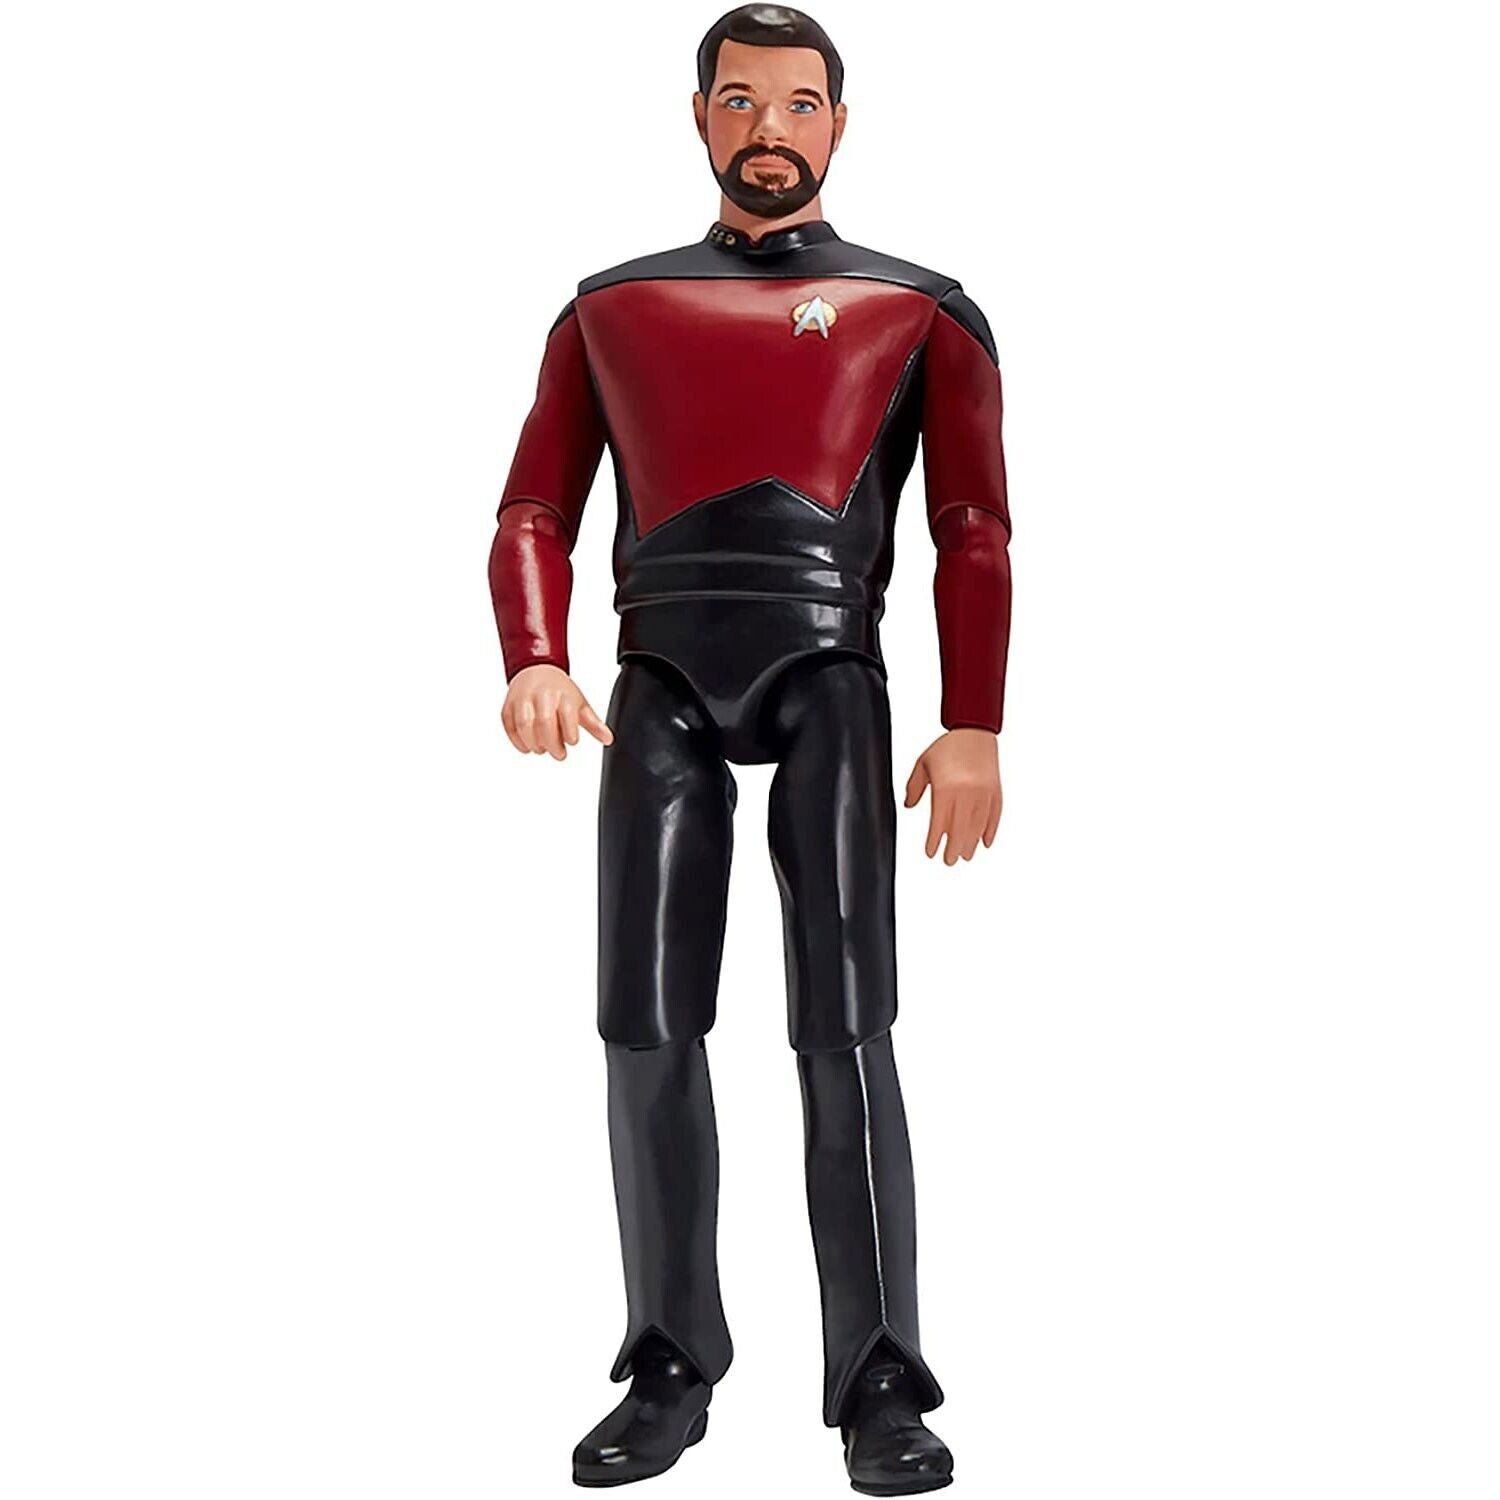 Star Trek Universe 5-Inch Commander William Riker Figure (The Next Generation)